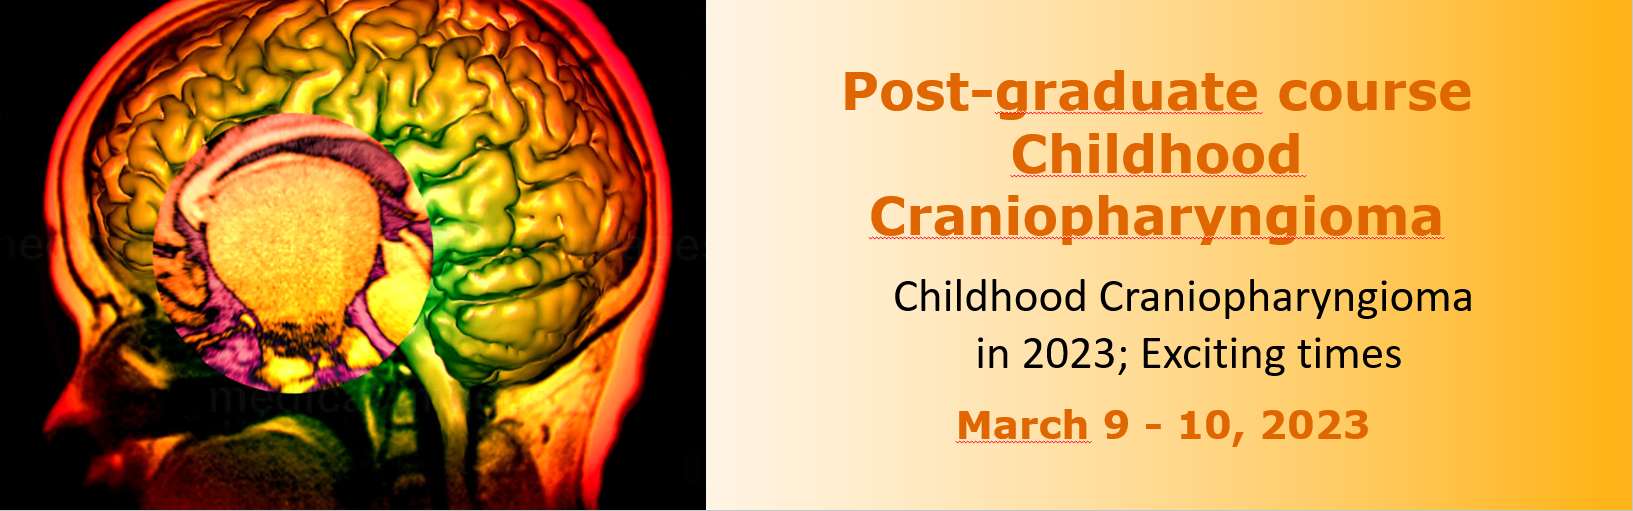 7th International Post-graduate Course on Childhood Craniopharyngioma